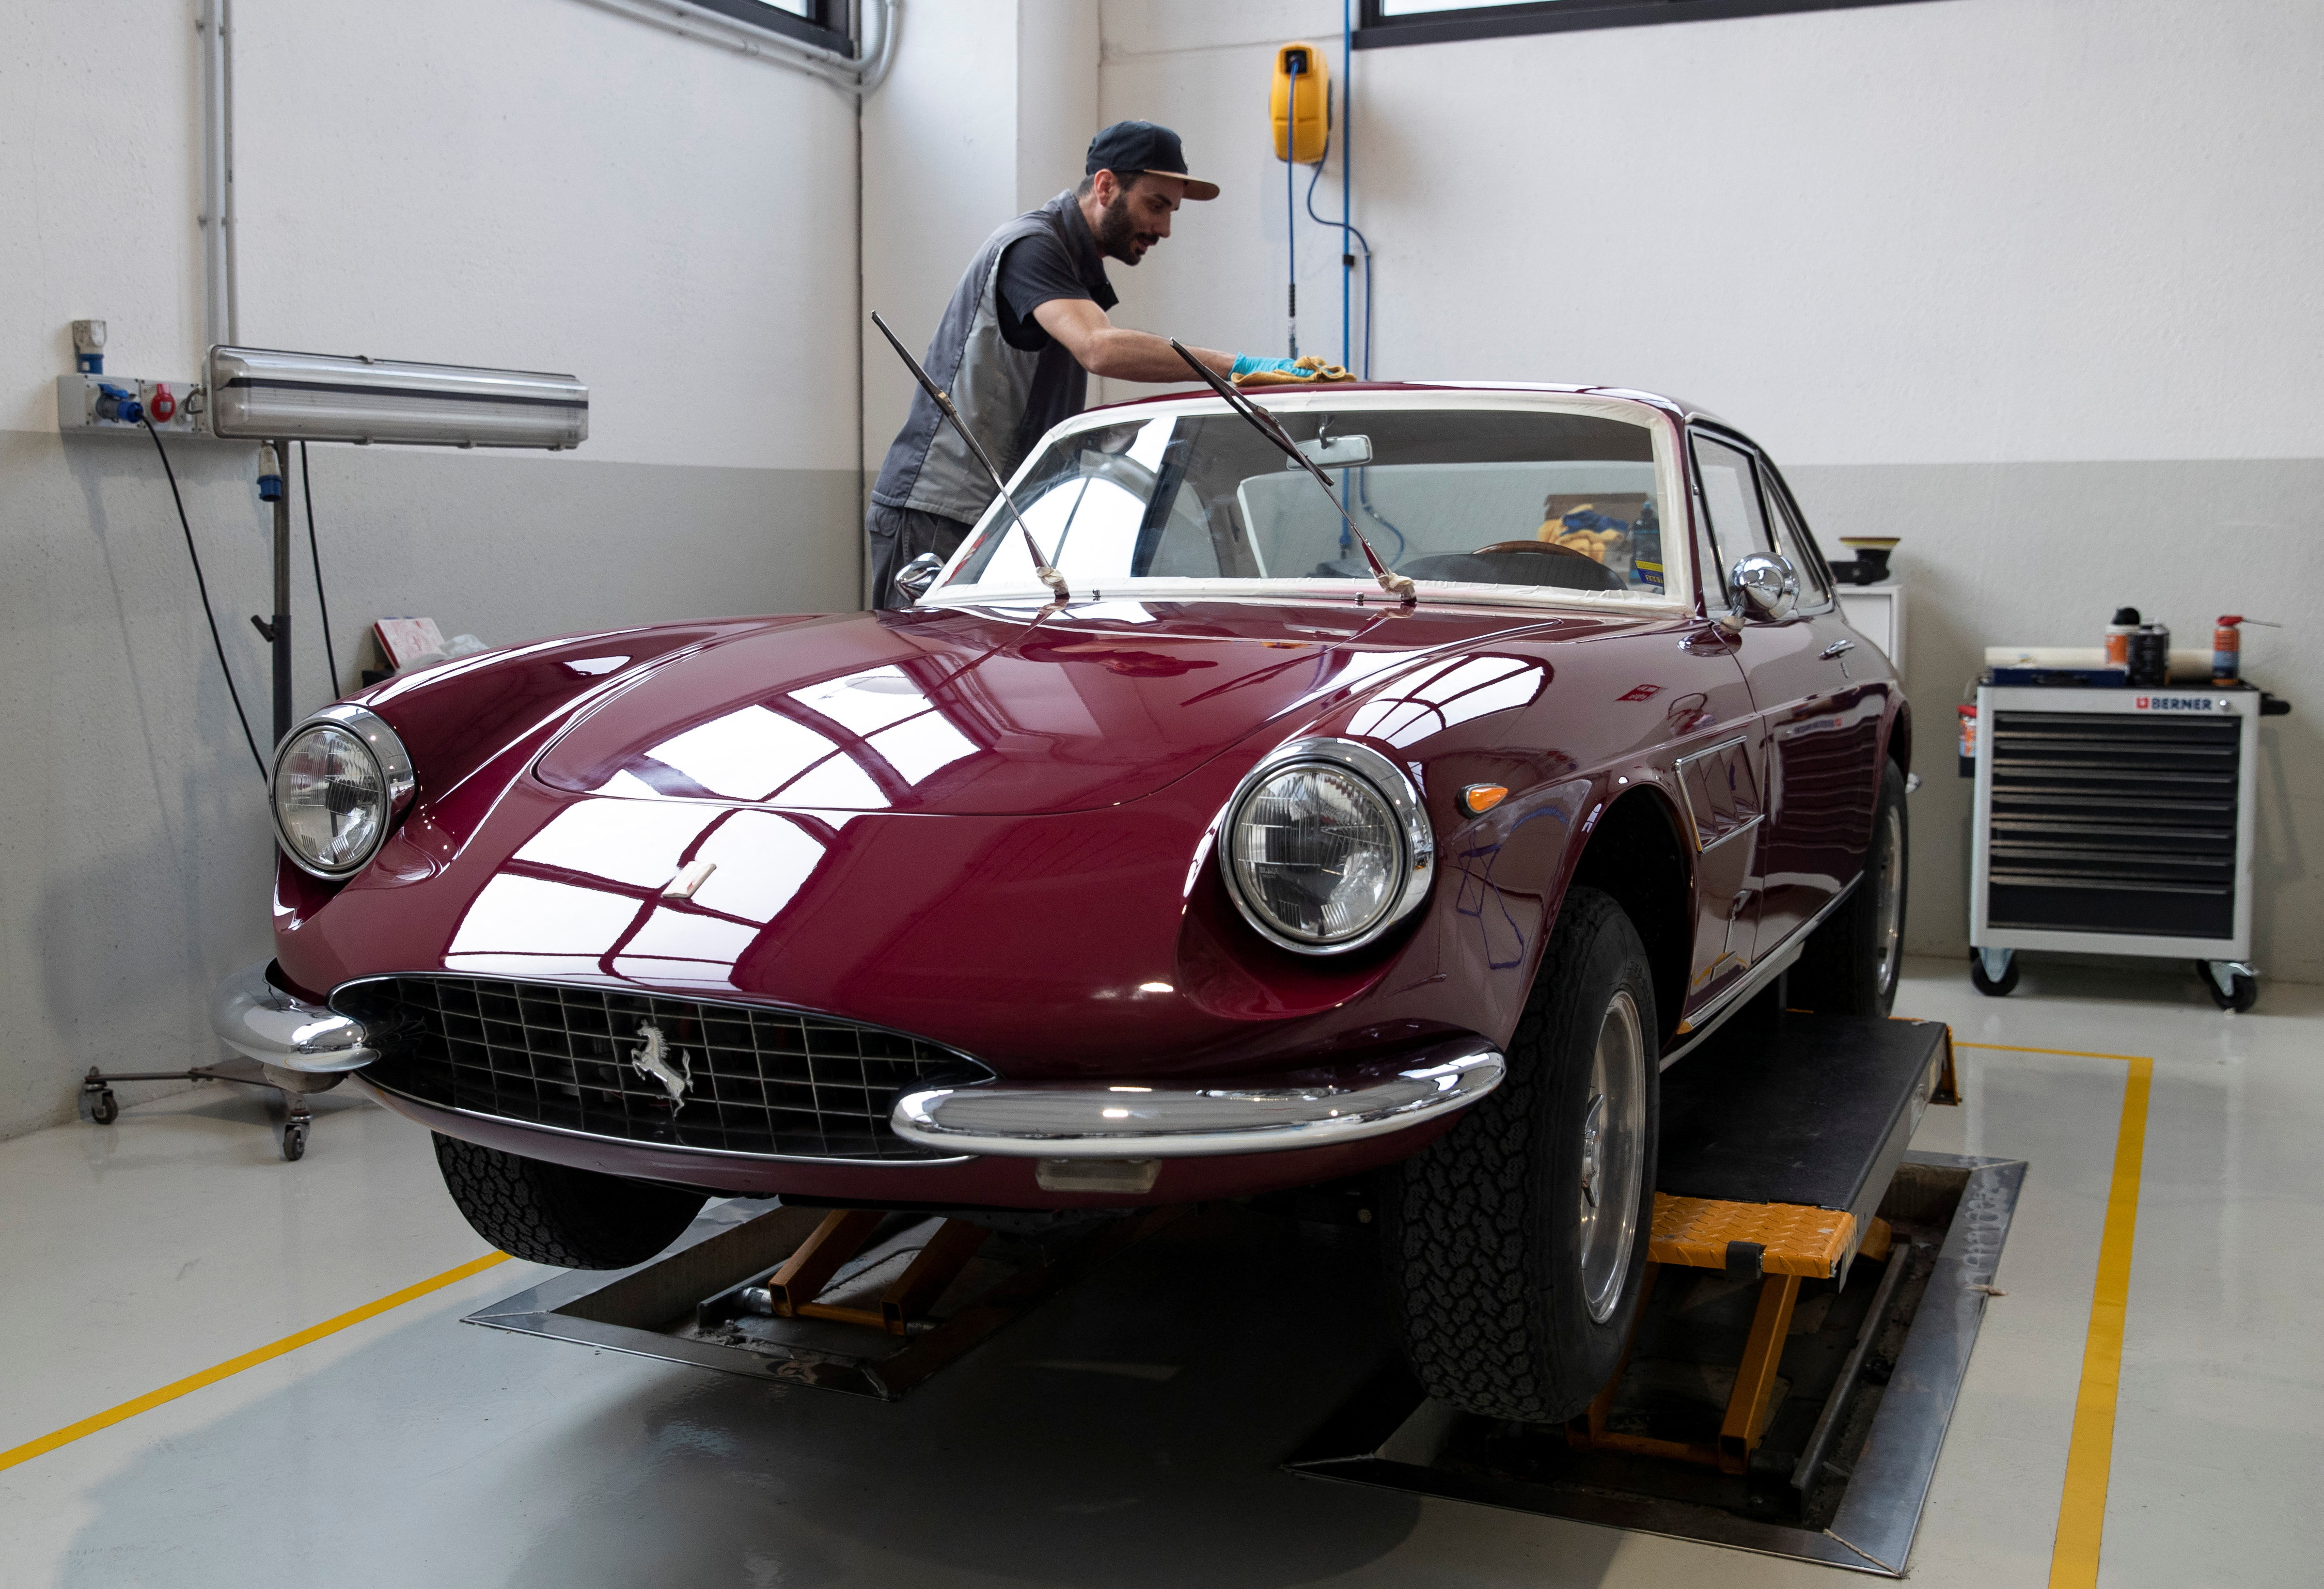 A man works on a Ferrari Classiche car at the Atelier Fiorano, a Rossocorsa authorised bodyshop in Assago